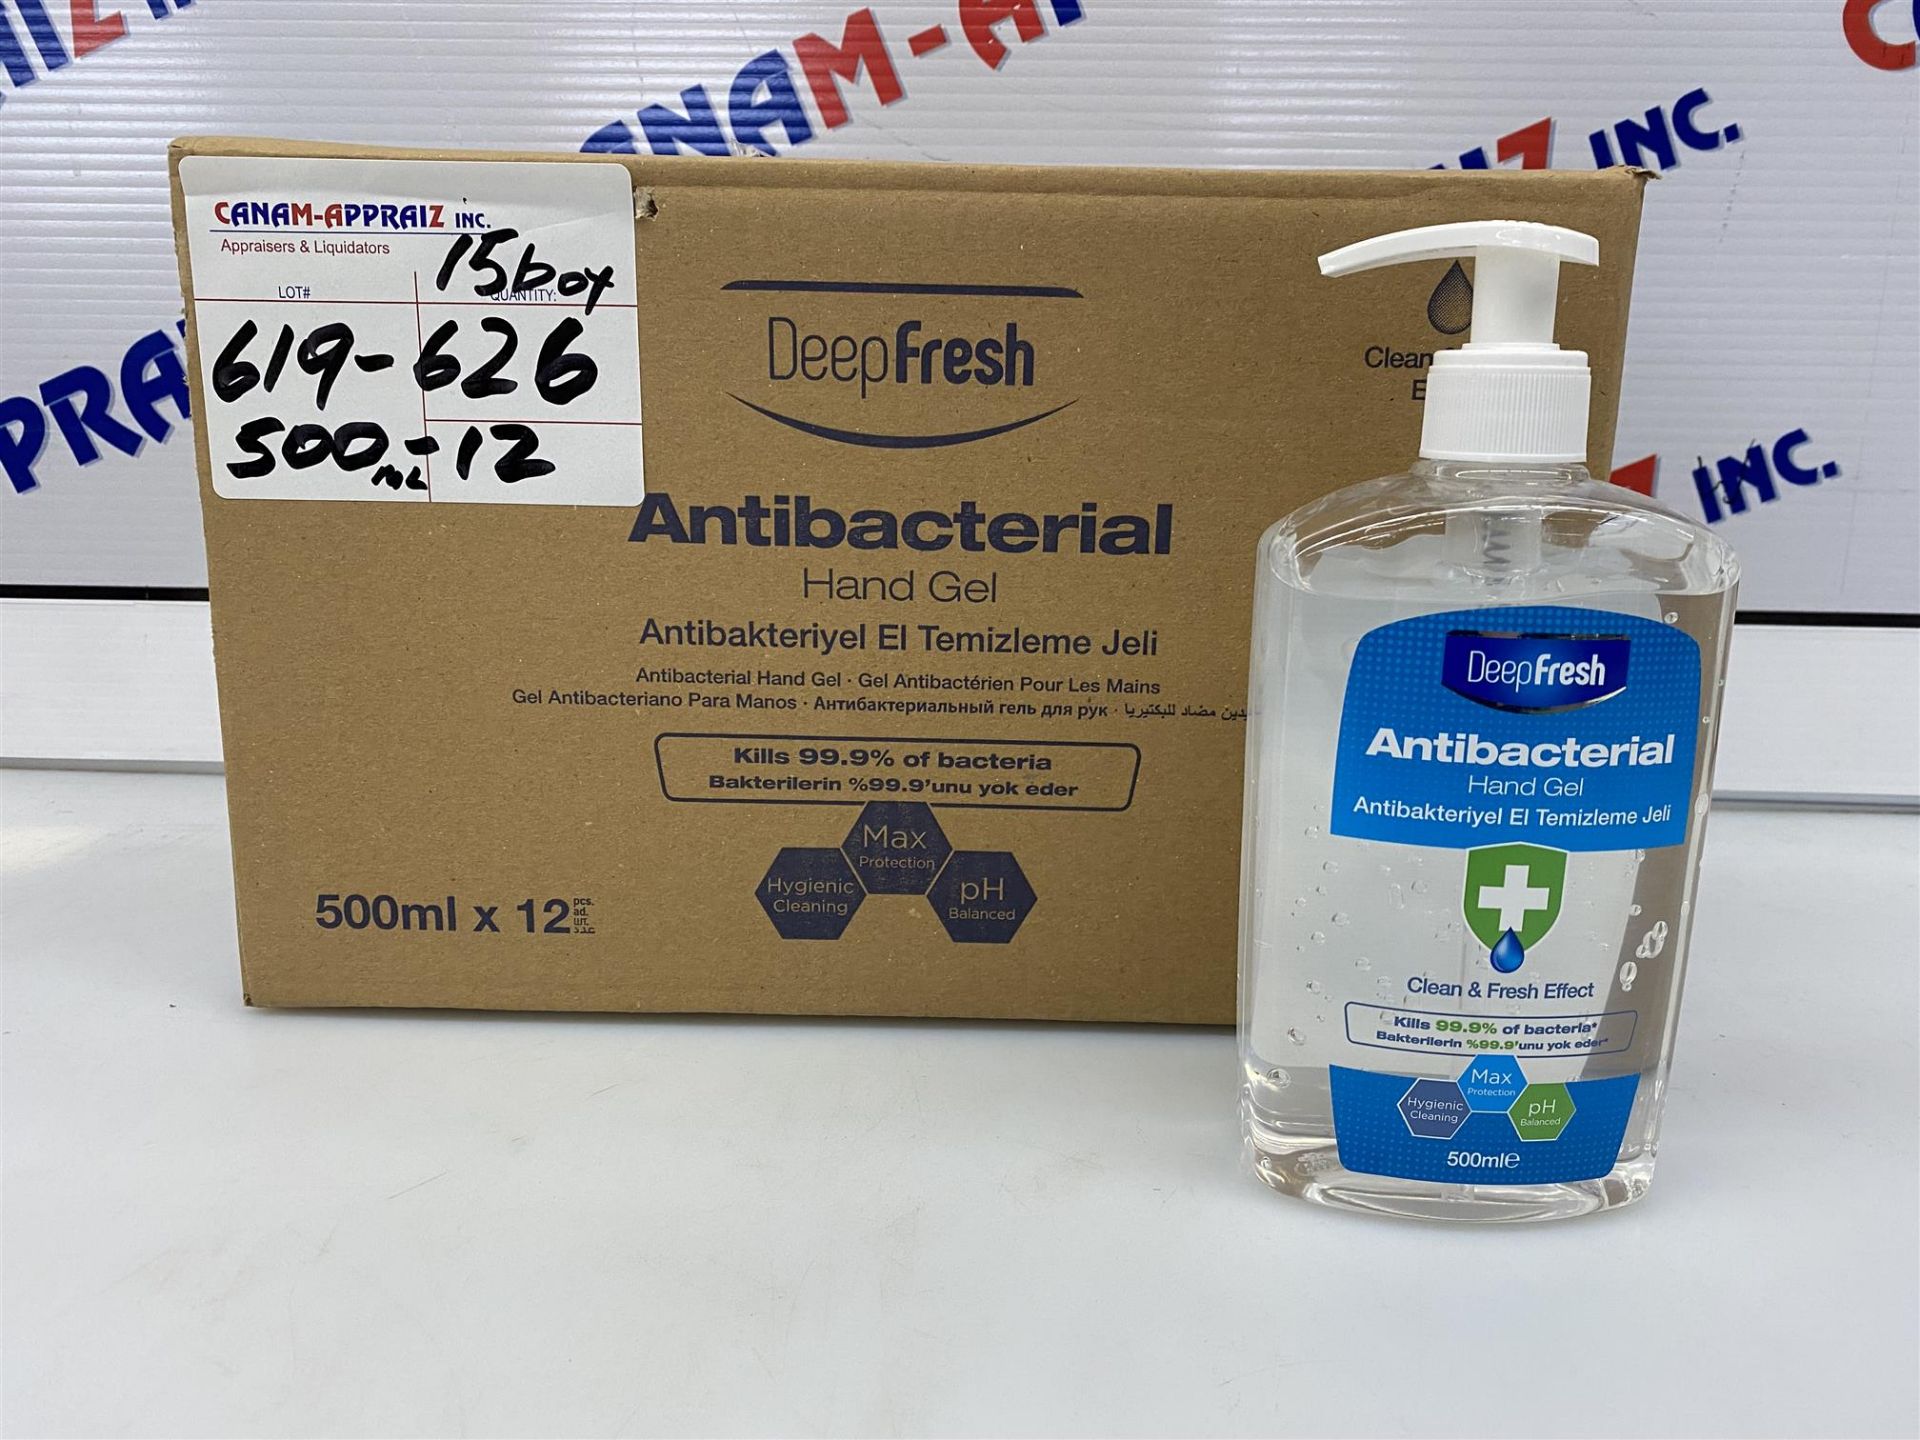 Deep Fresh - Antibacterial Hand Gel - 500ml x 12/box - 15BOXES